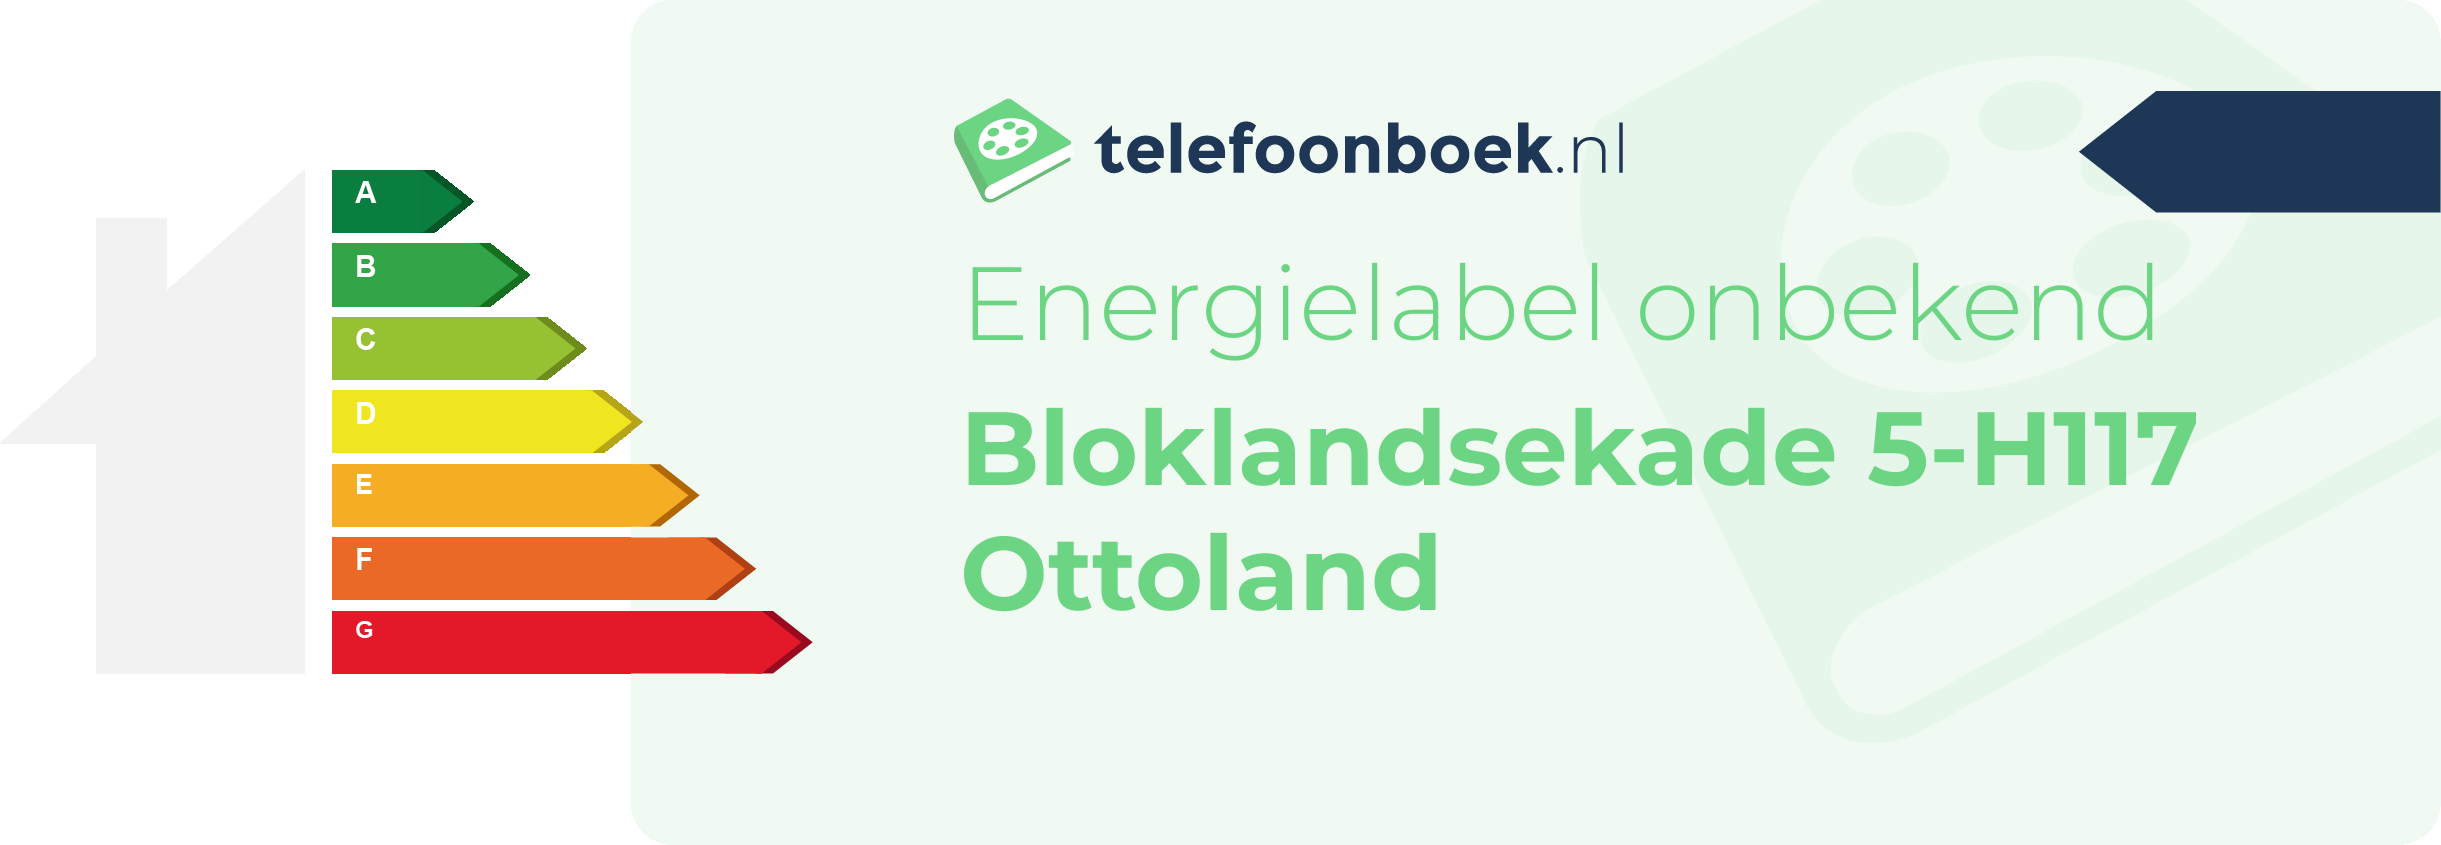 Energielabel Bloklandsekade 5-H117 Ottoland